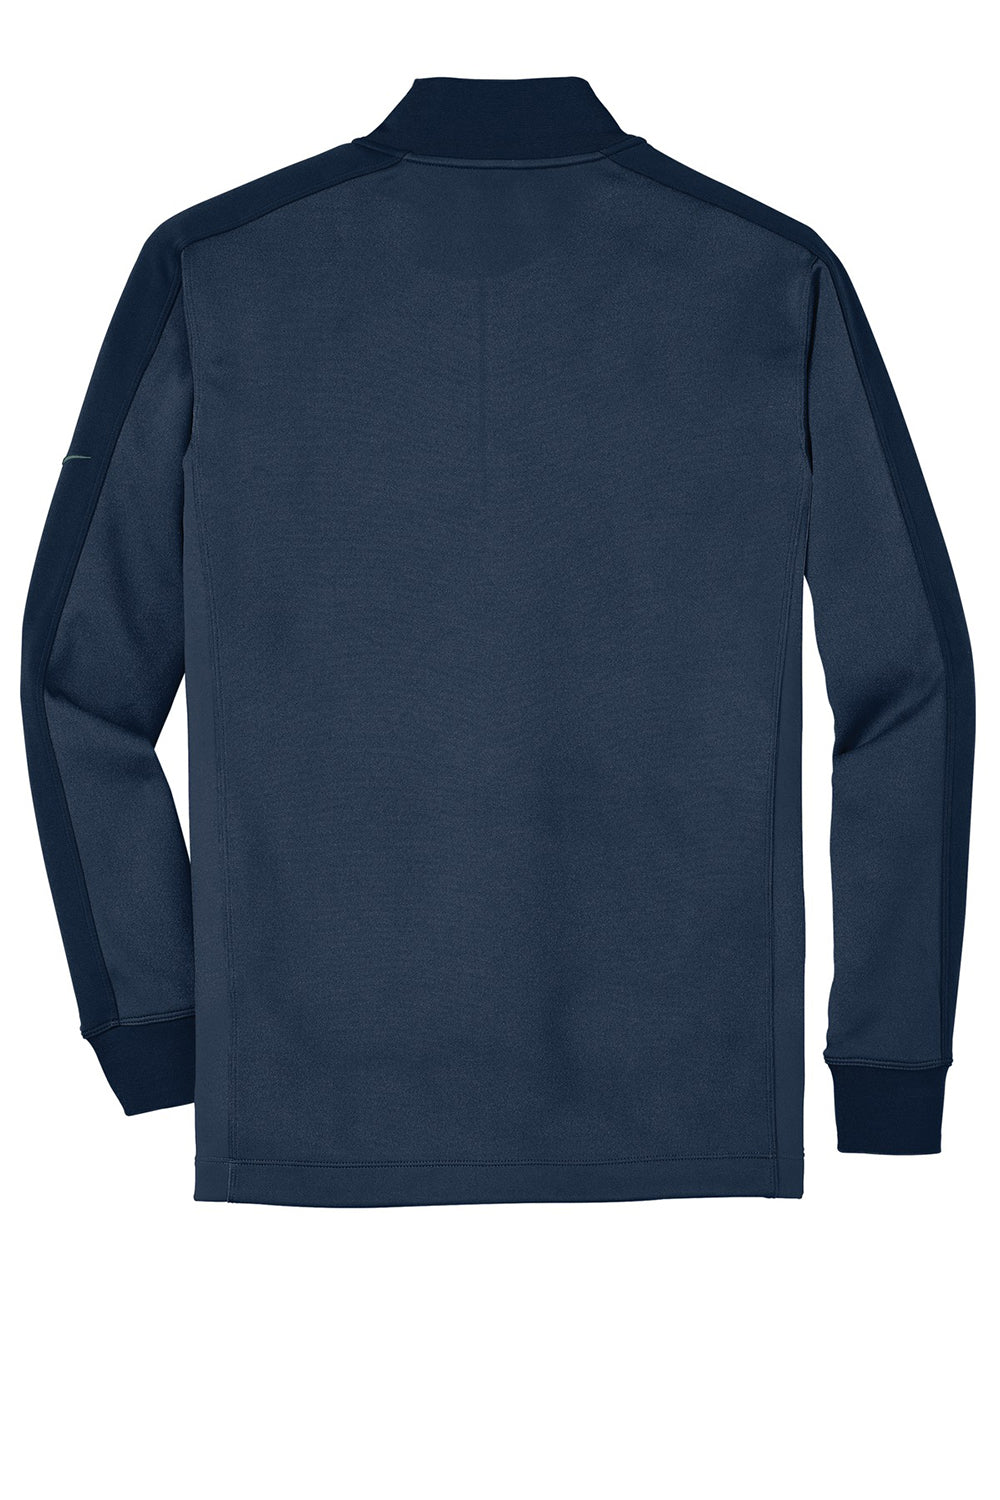 Nike 578673 Mens Dri-Fit Moisture Wicking 1/4 Zip Sweatshirt Heather Navy Blue/Navy Blue Flat Back